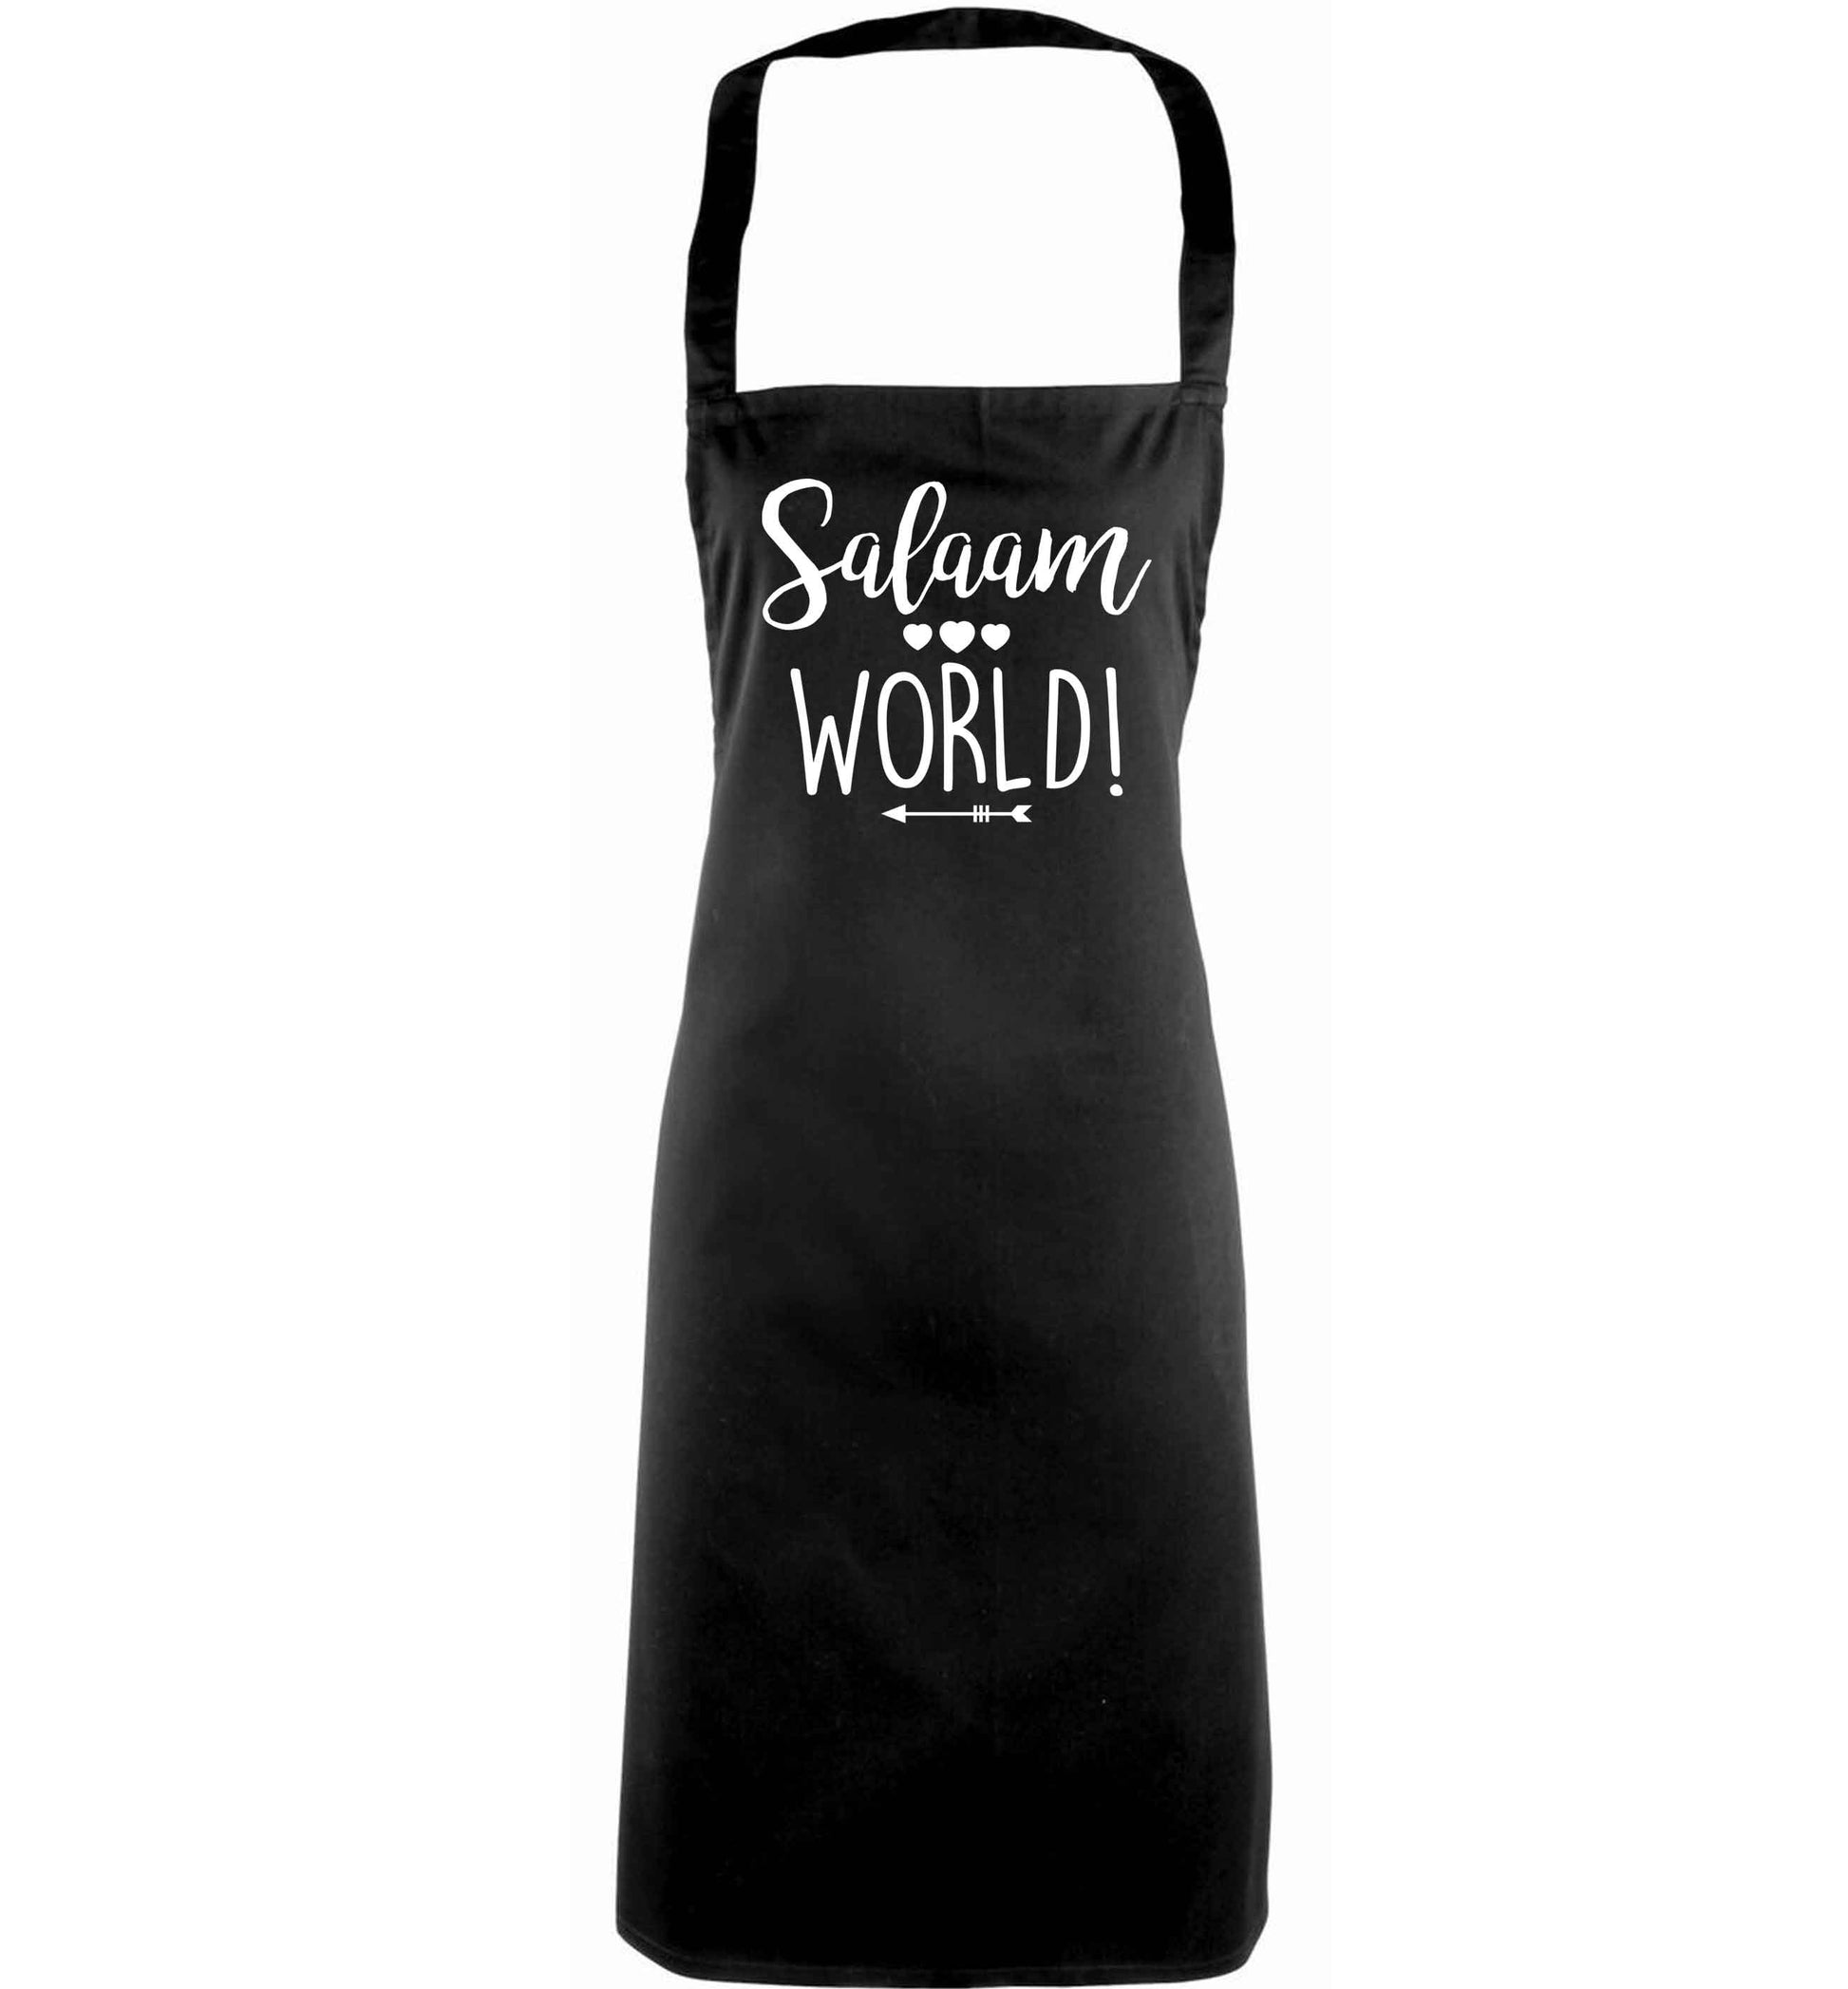 Salaam world adults black apron